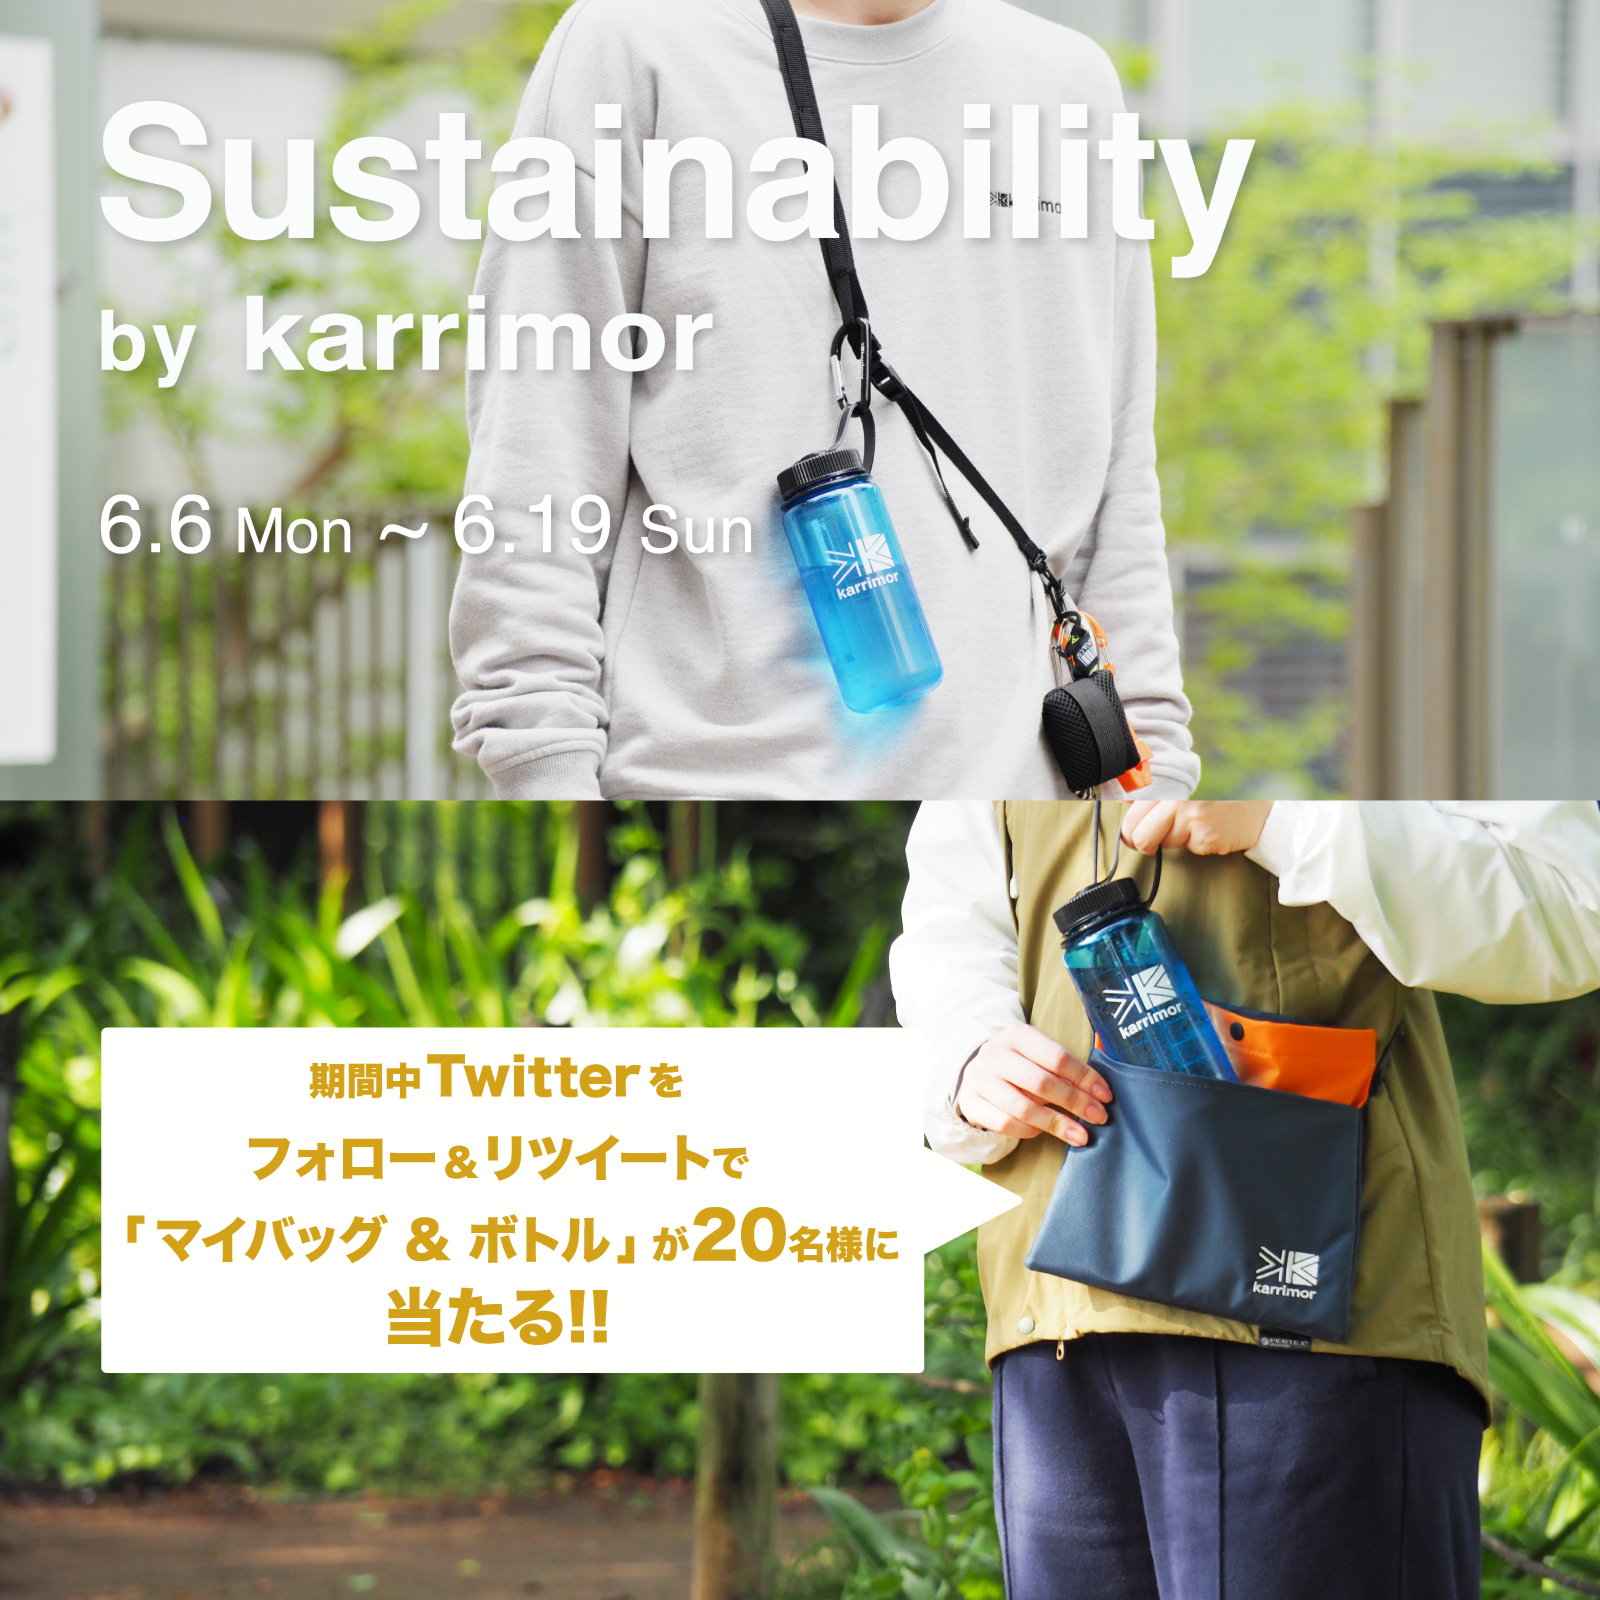 Sustainability by karrimor